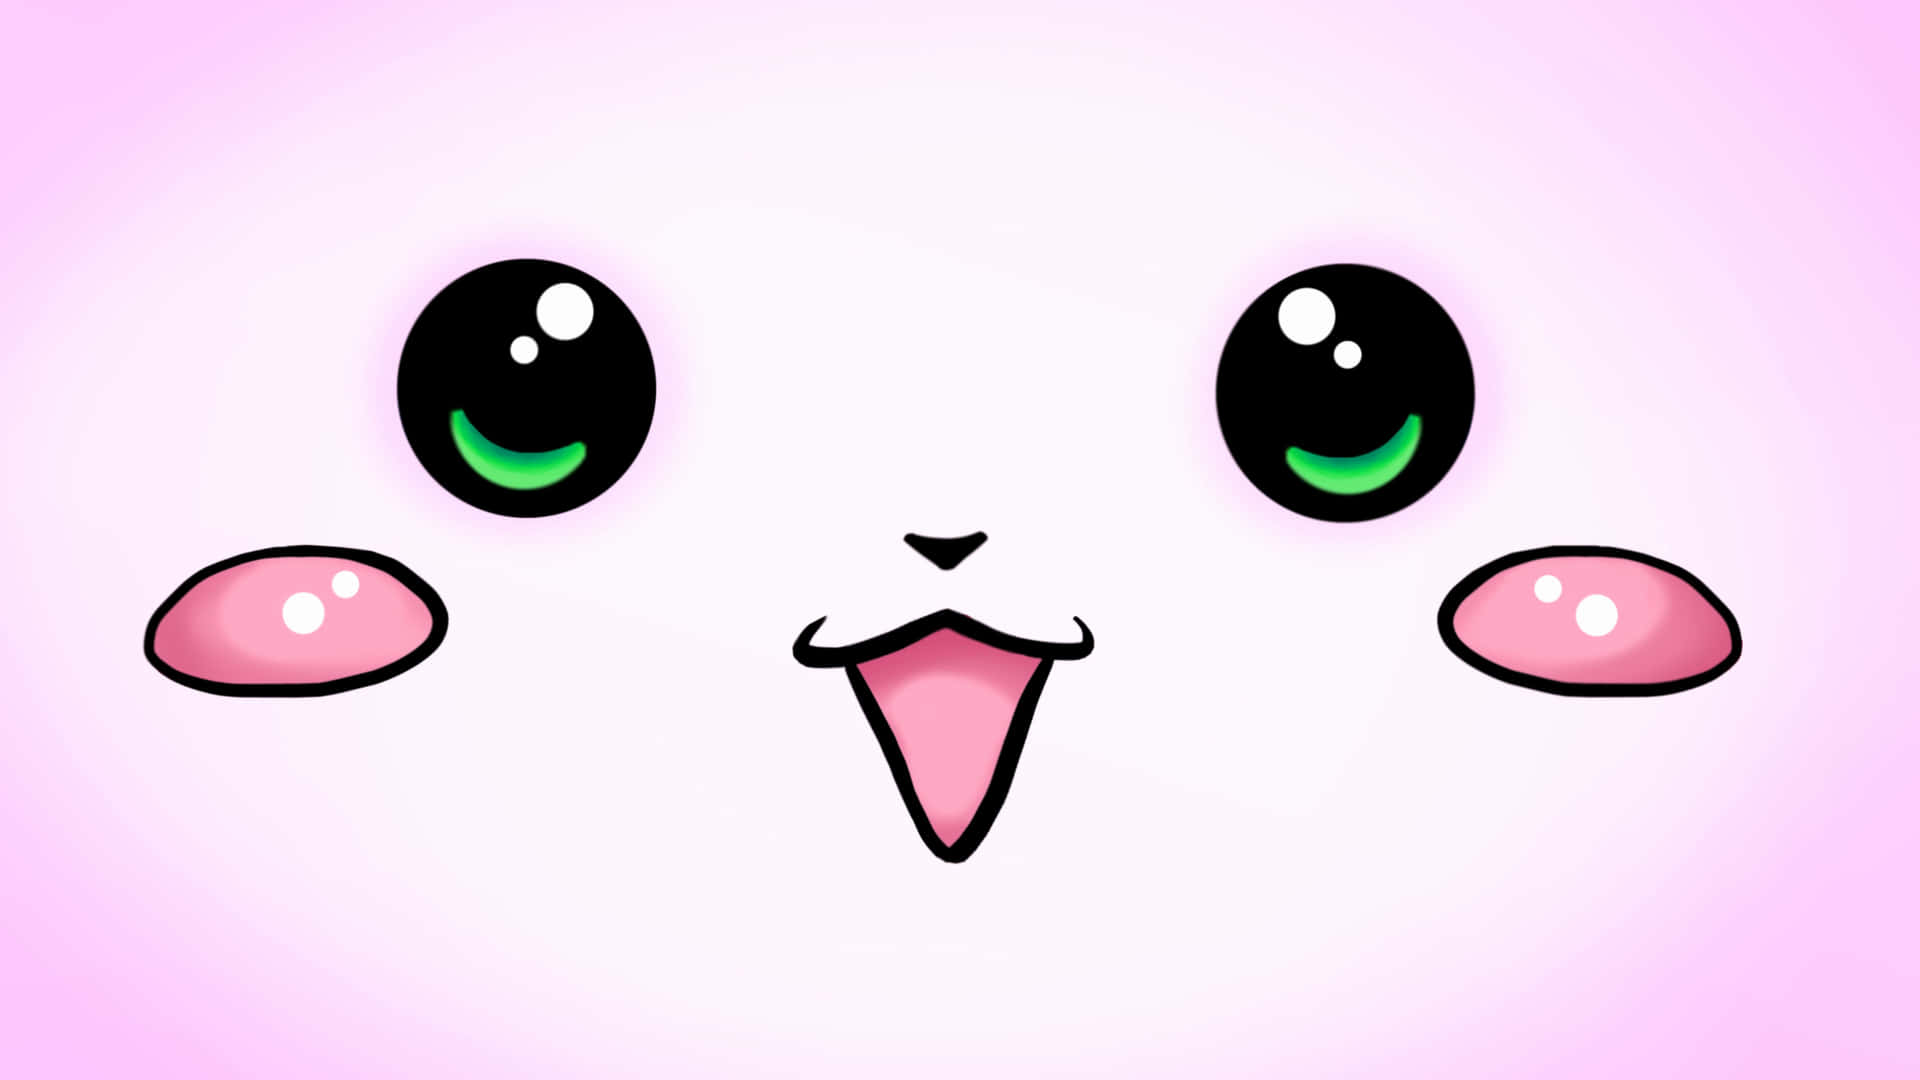 “Unlock your inner cuteness with Kawaii Pink!”